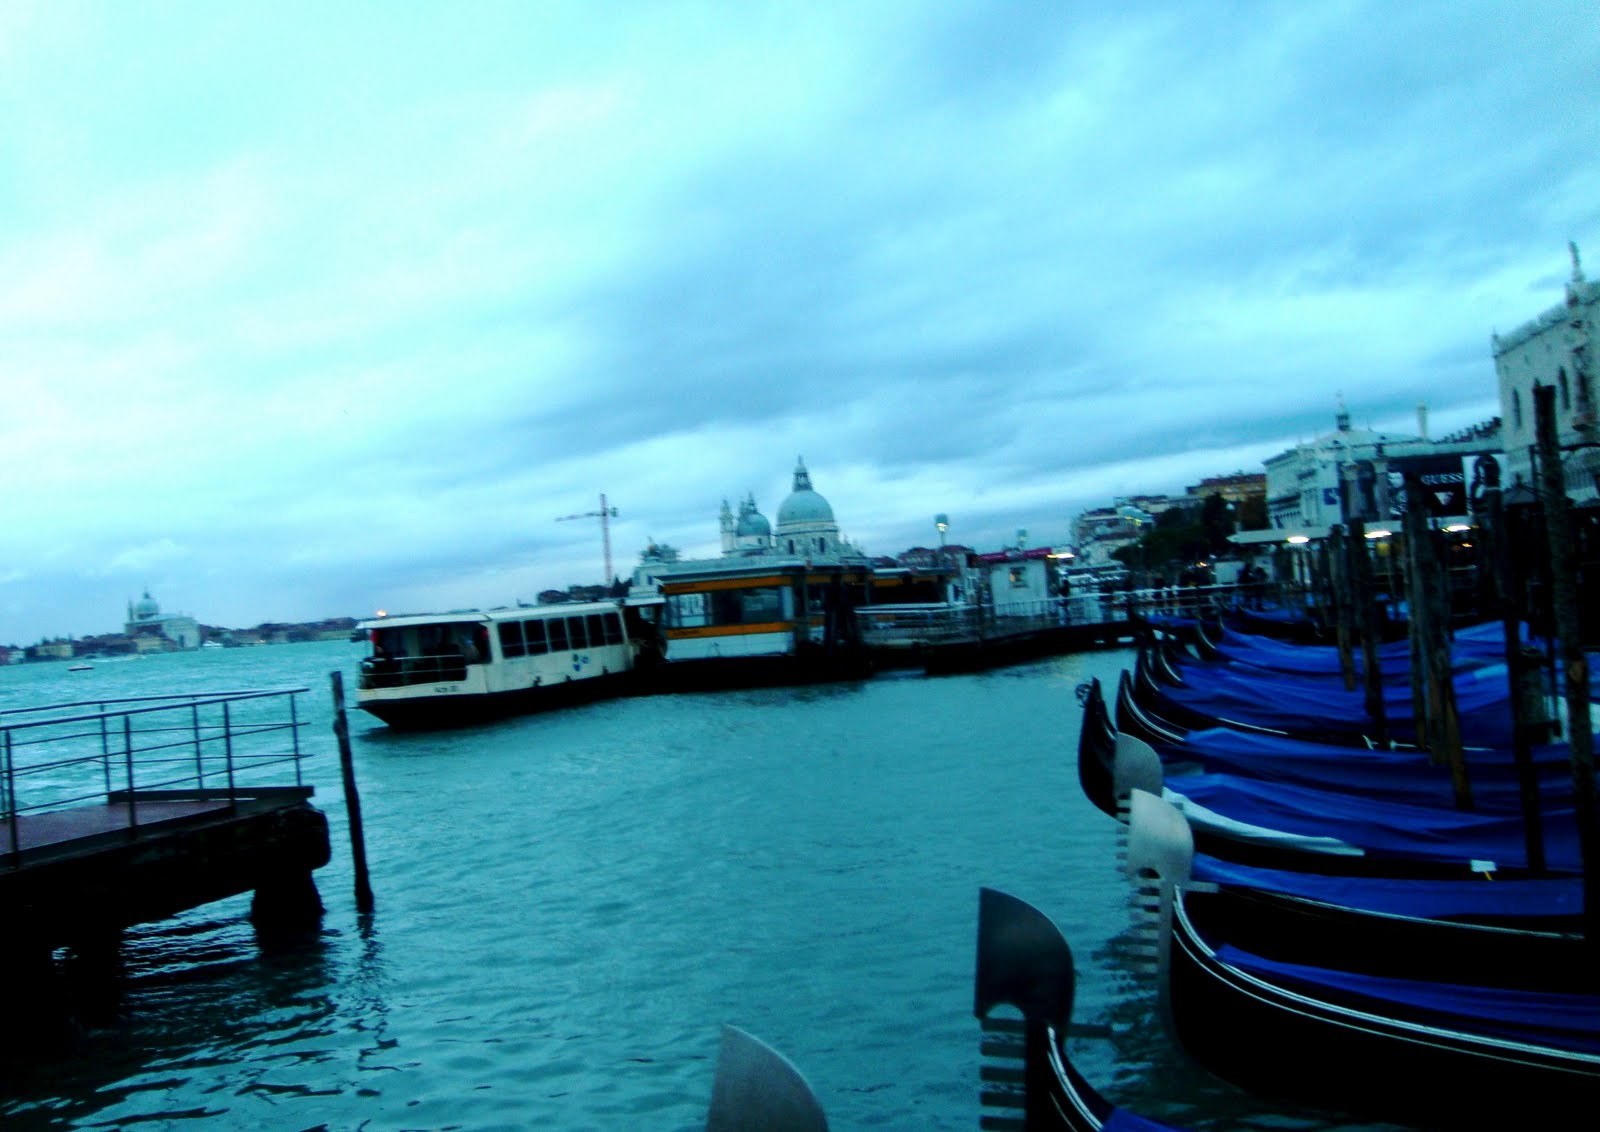 An evening in Venice